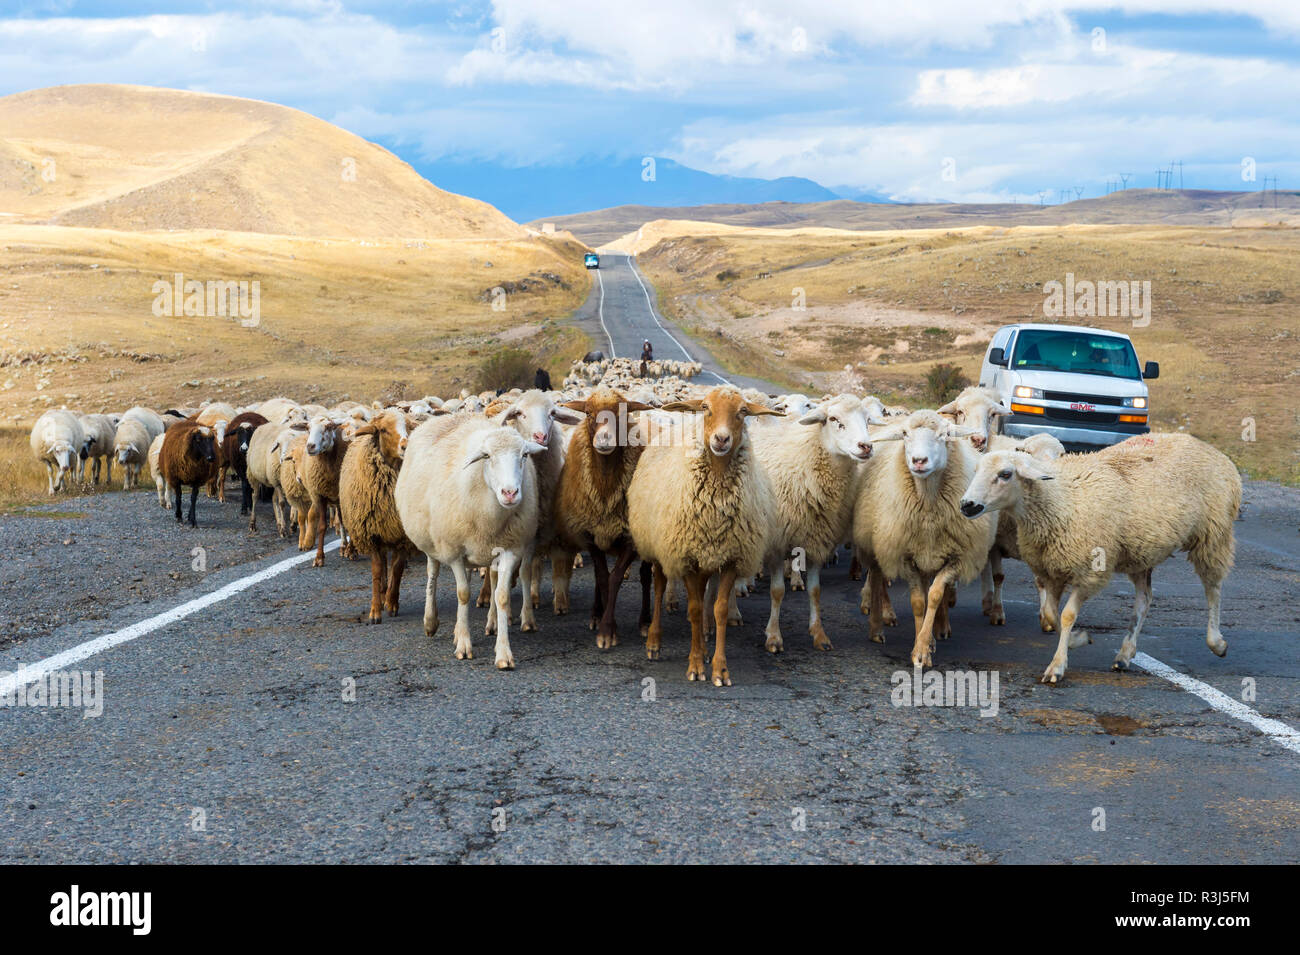 Shephard conducting a group of sheep down a road, Tavush Province, Armenia Stock Photo